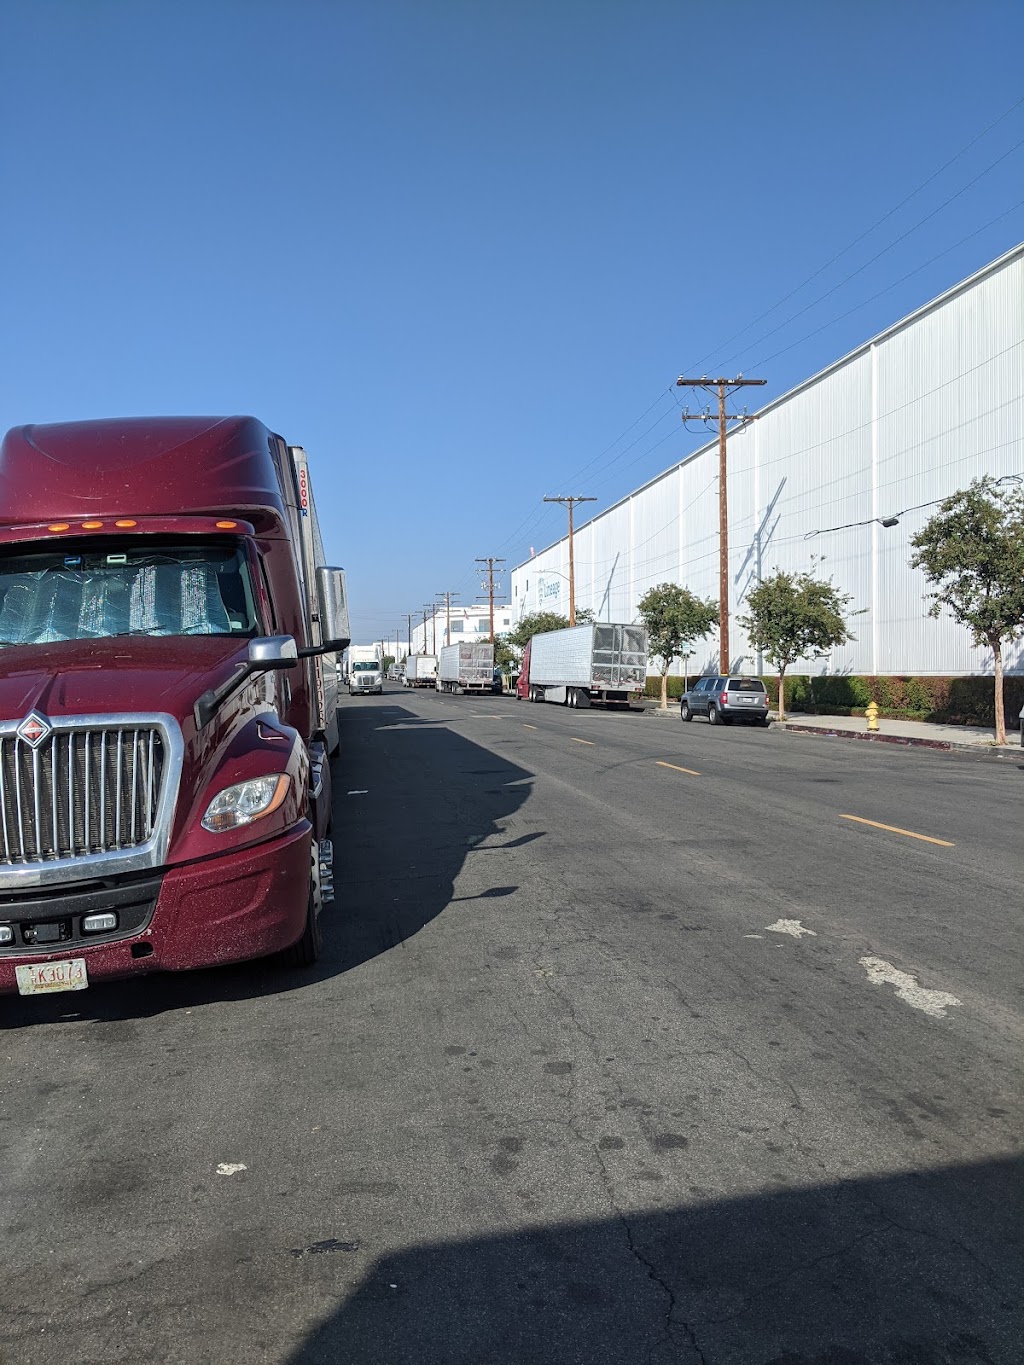 Lineage Logistics | 3211 E 44th St, Vernon, CA 90058, USA | Phone: (323) 923-2002